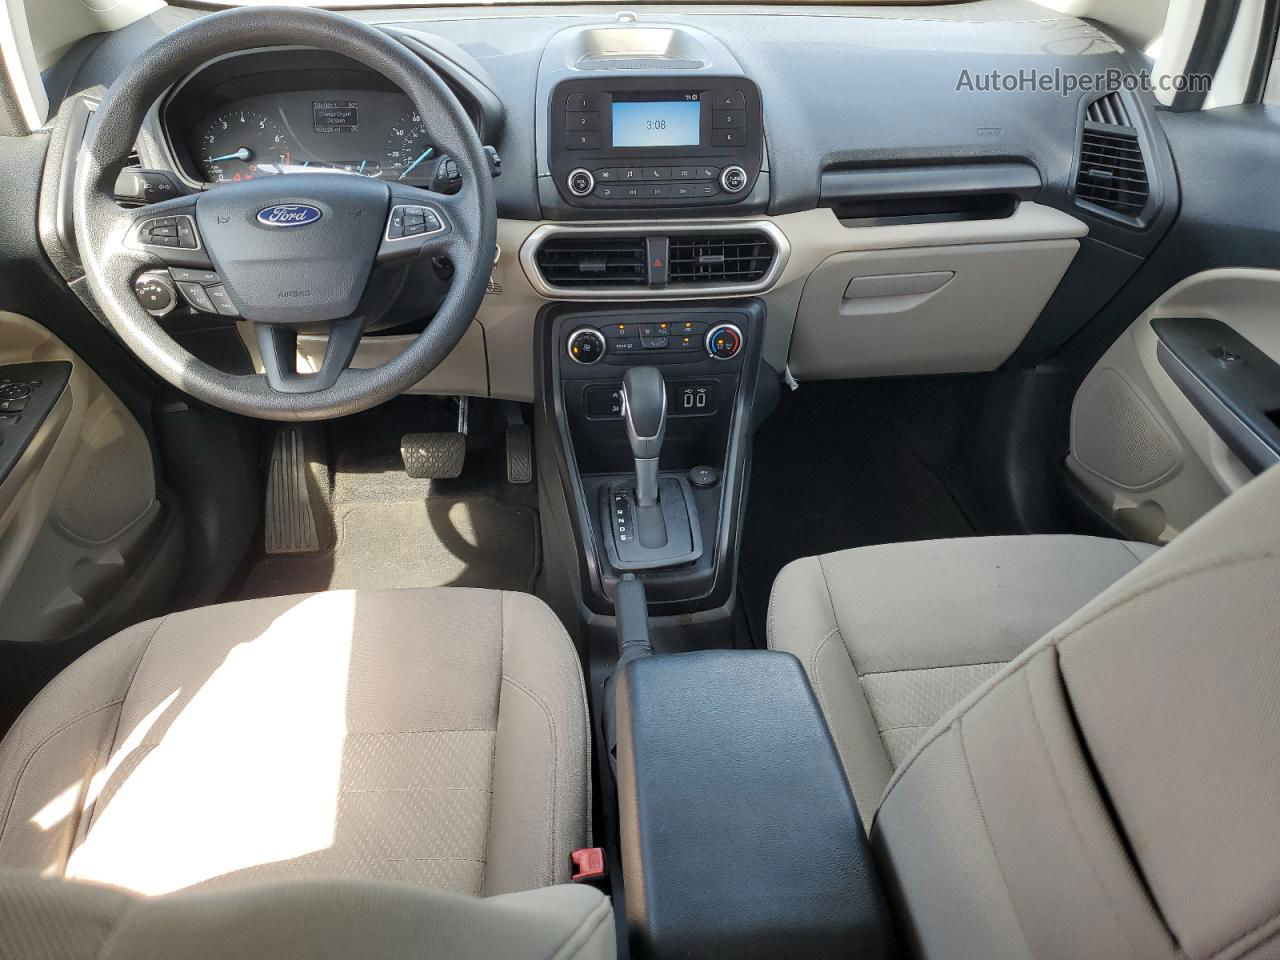 2019 Ford Ecosport S White vin: MAJ3S2FE9KC298528